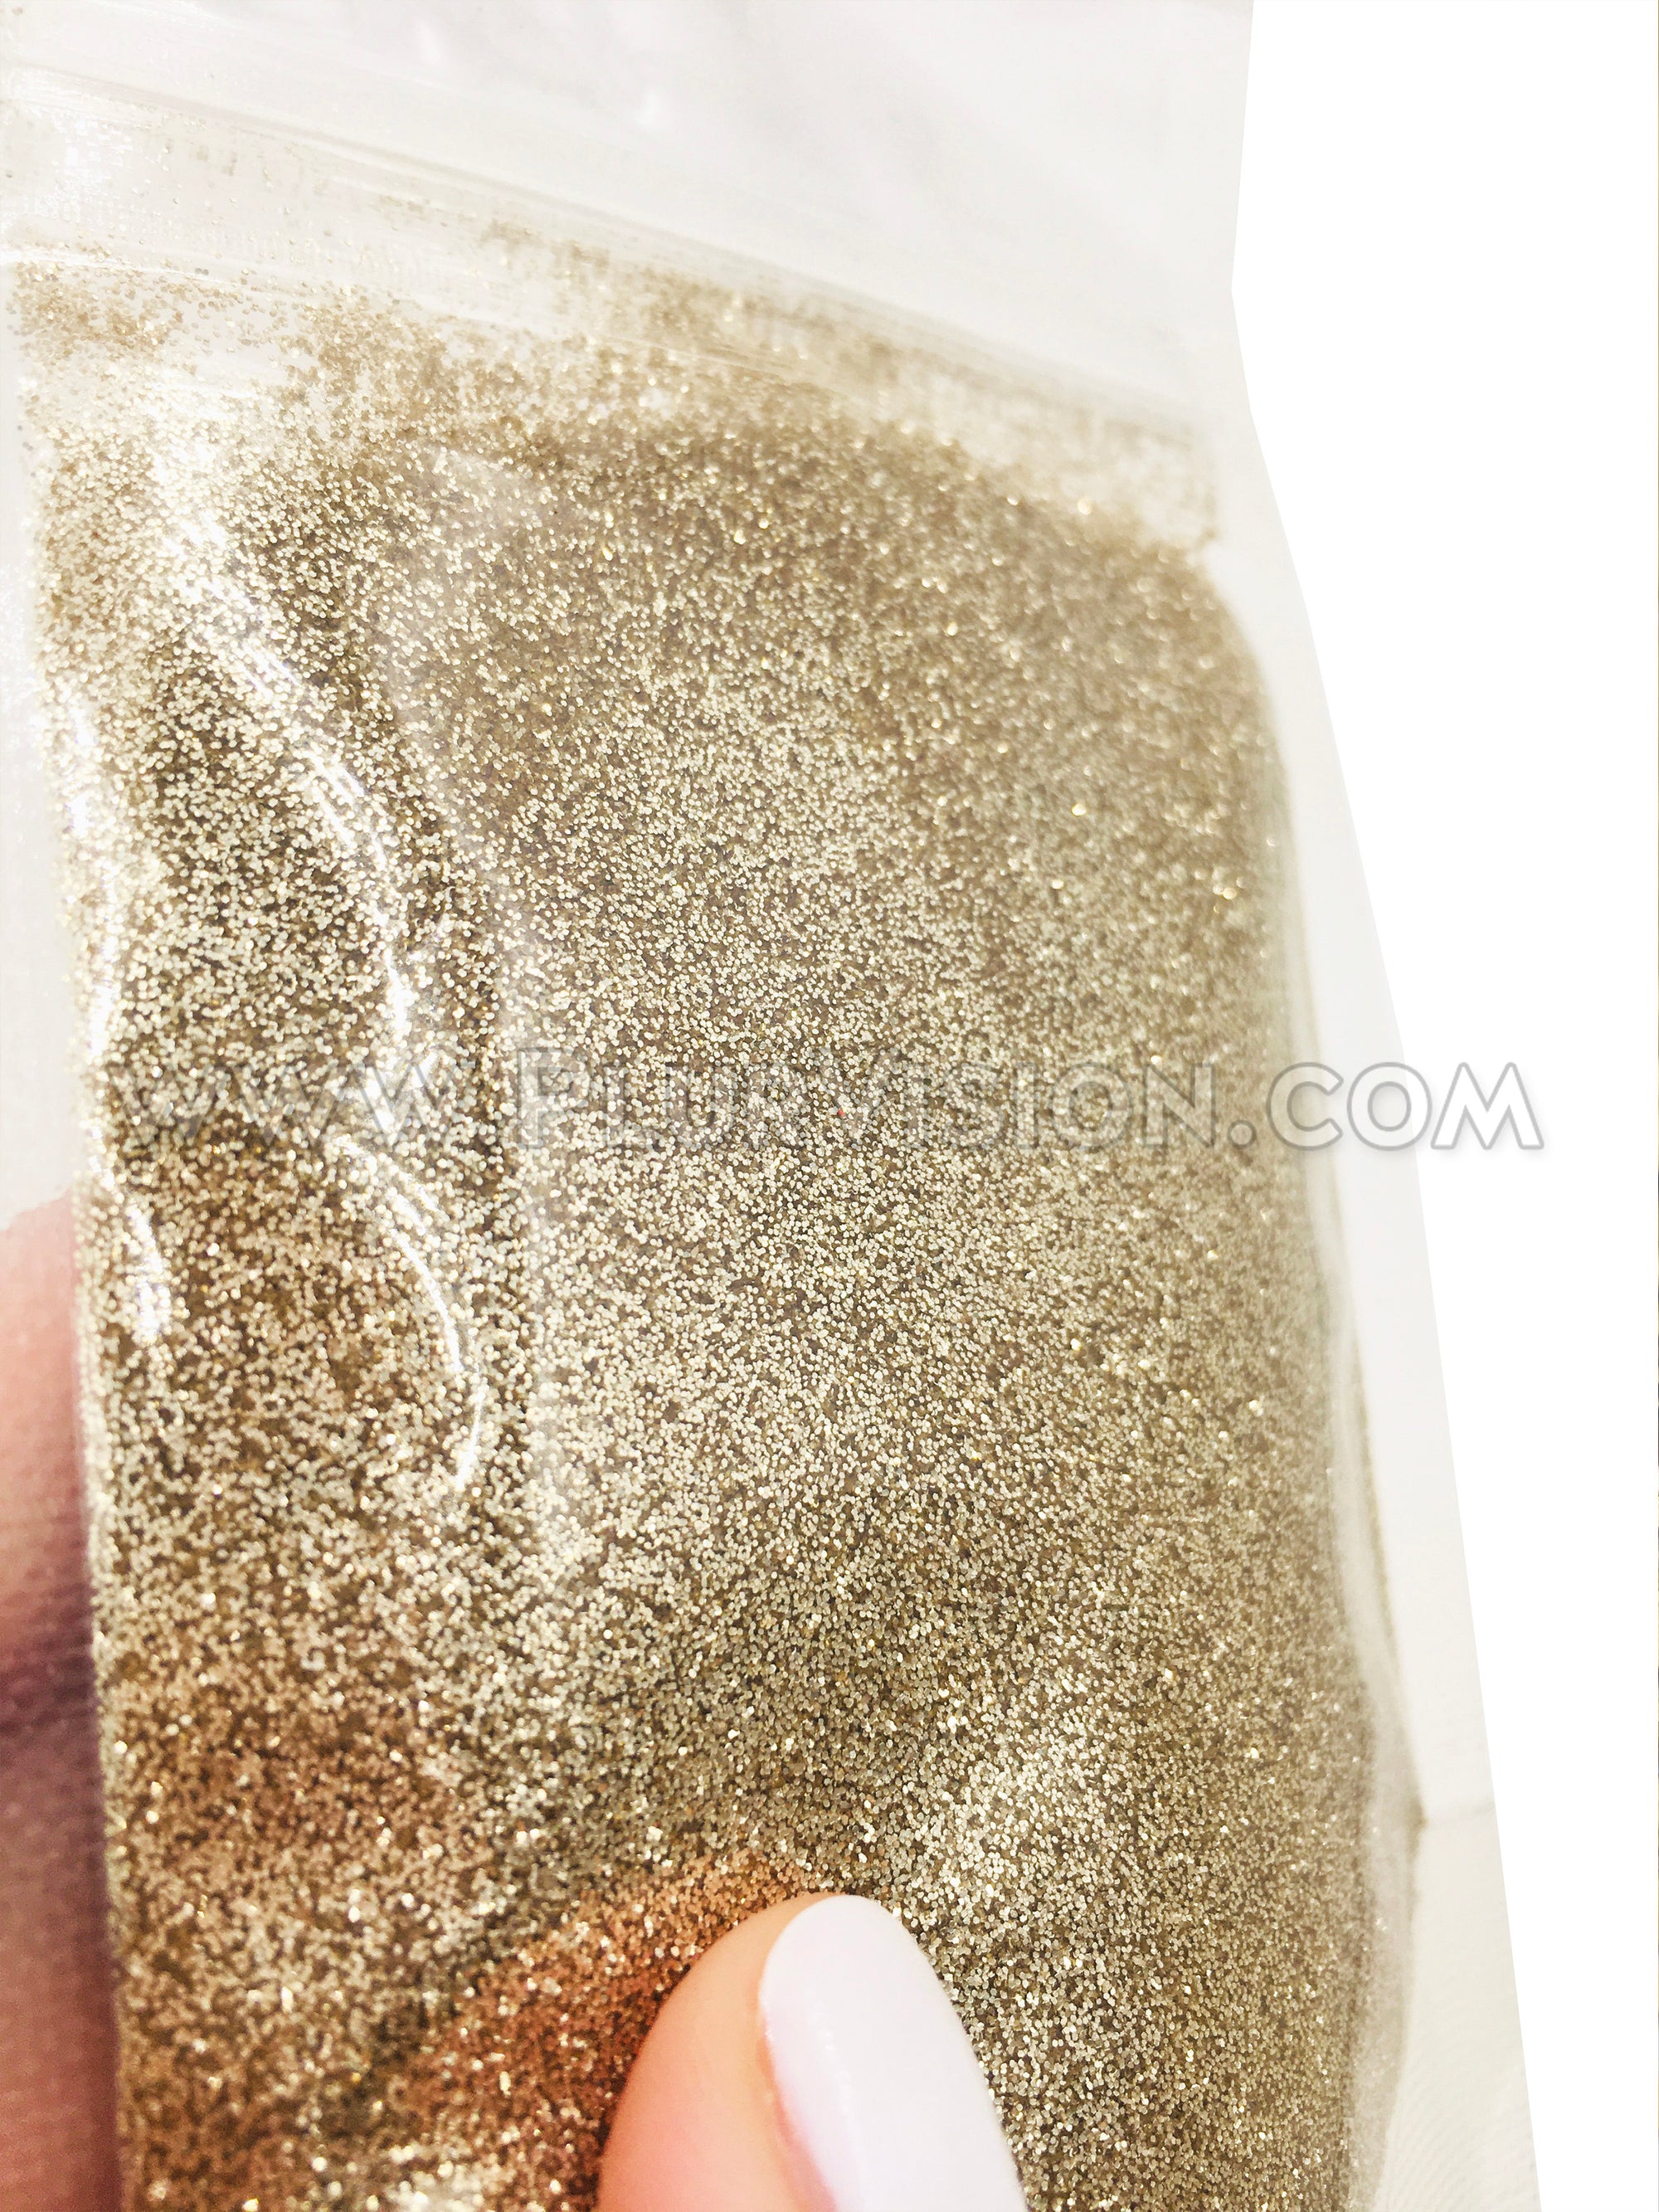 ✨ Gold Lush Biodegradable Glitter! ✨